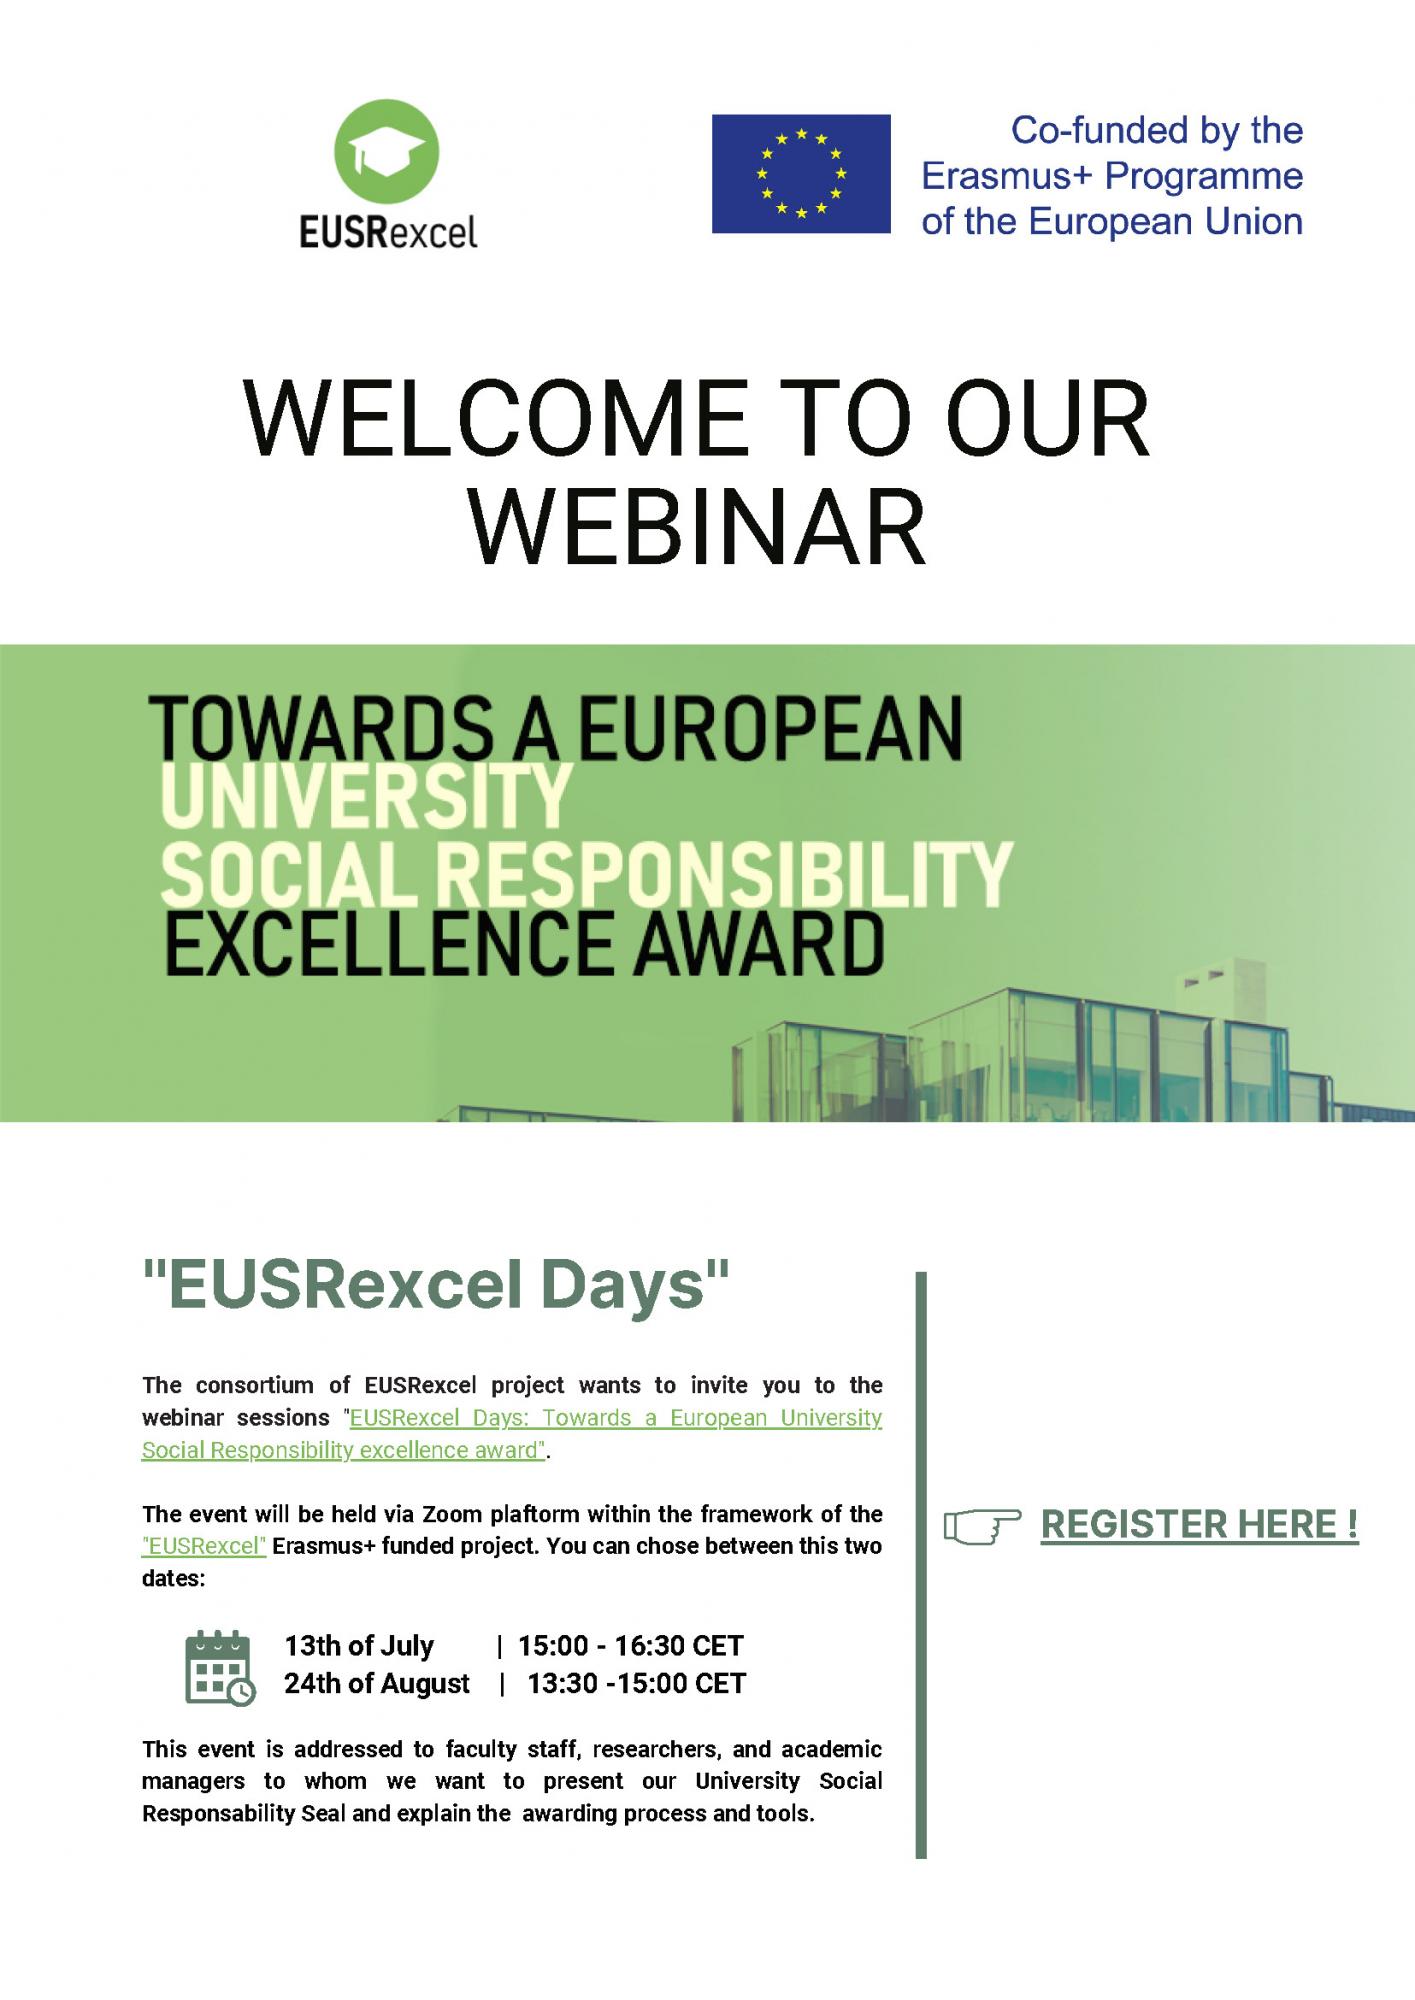 EUSRexcel event